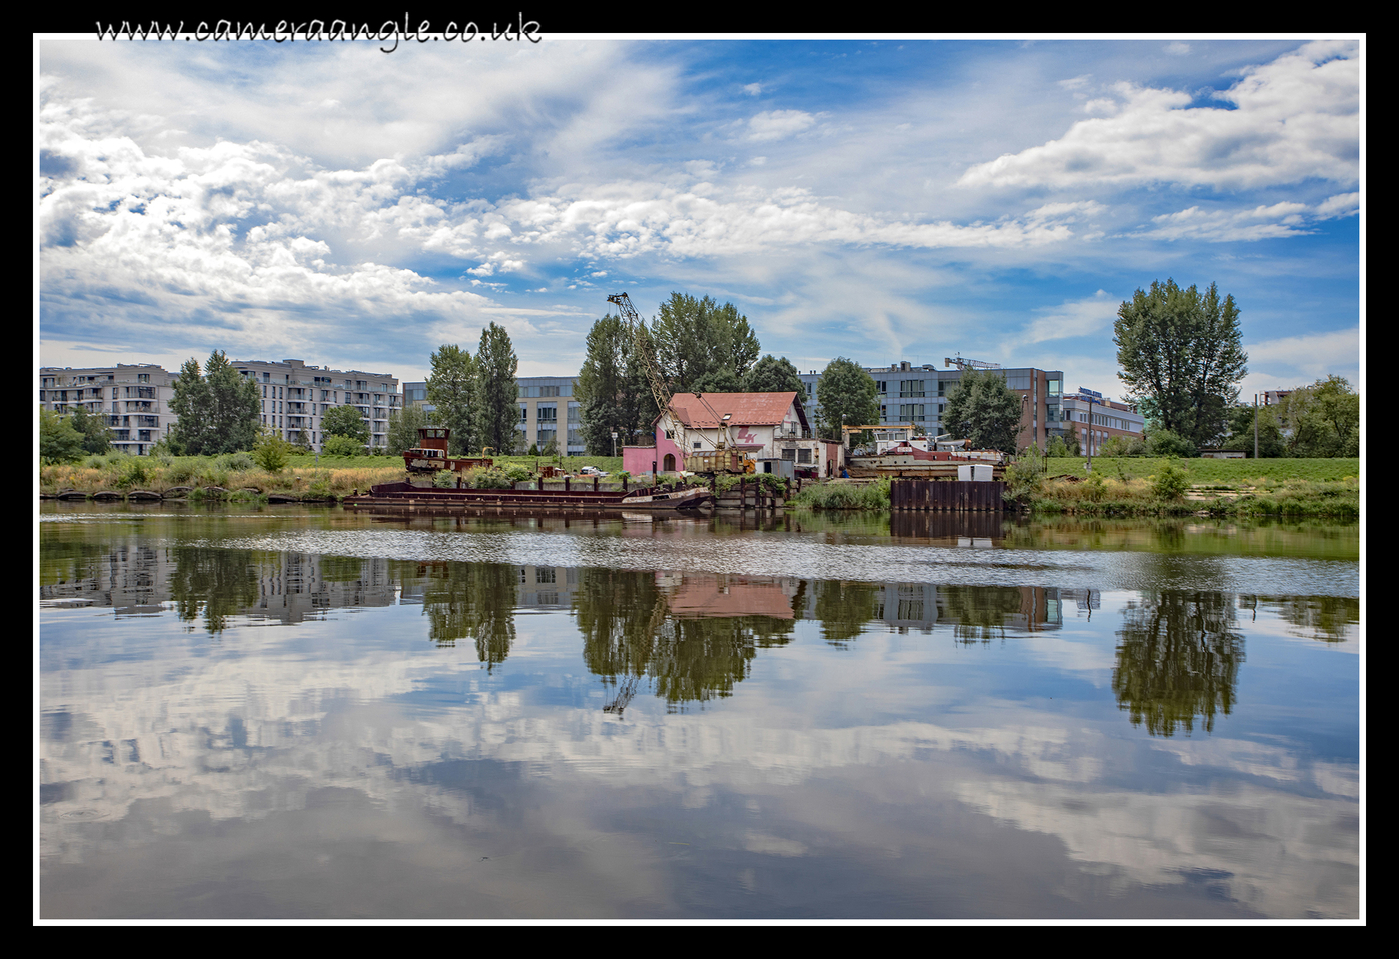 Vistula River
Keywords: 2019 Krakow Vistula River